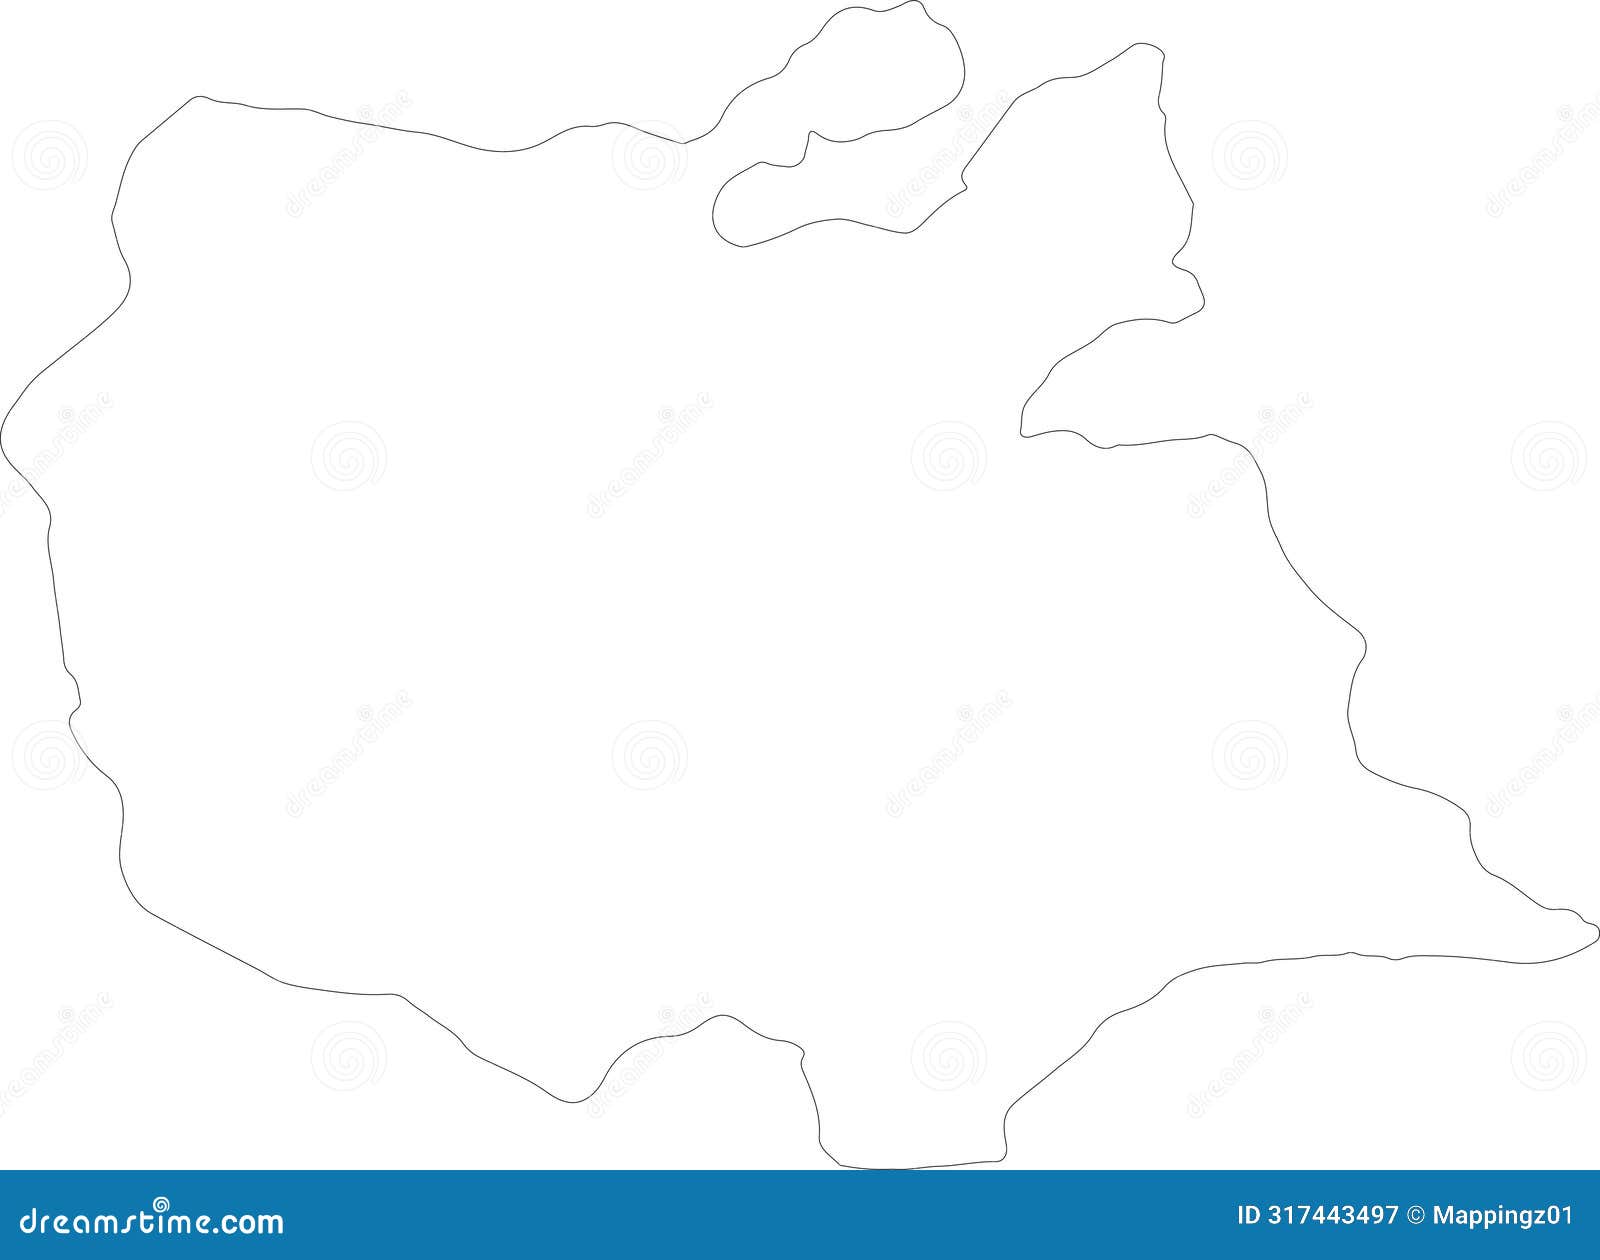 east azarbaijan iran outline map